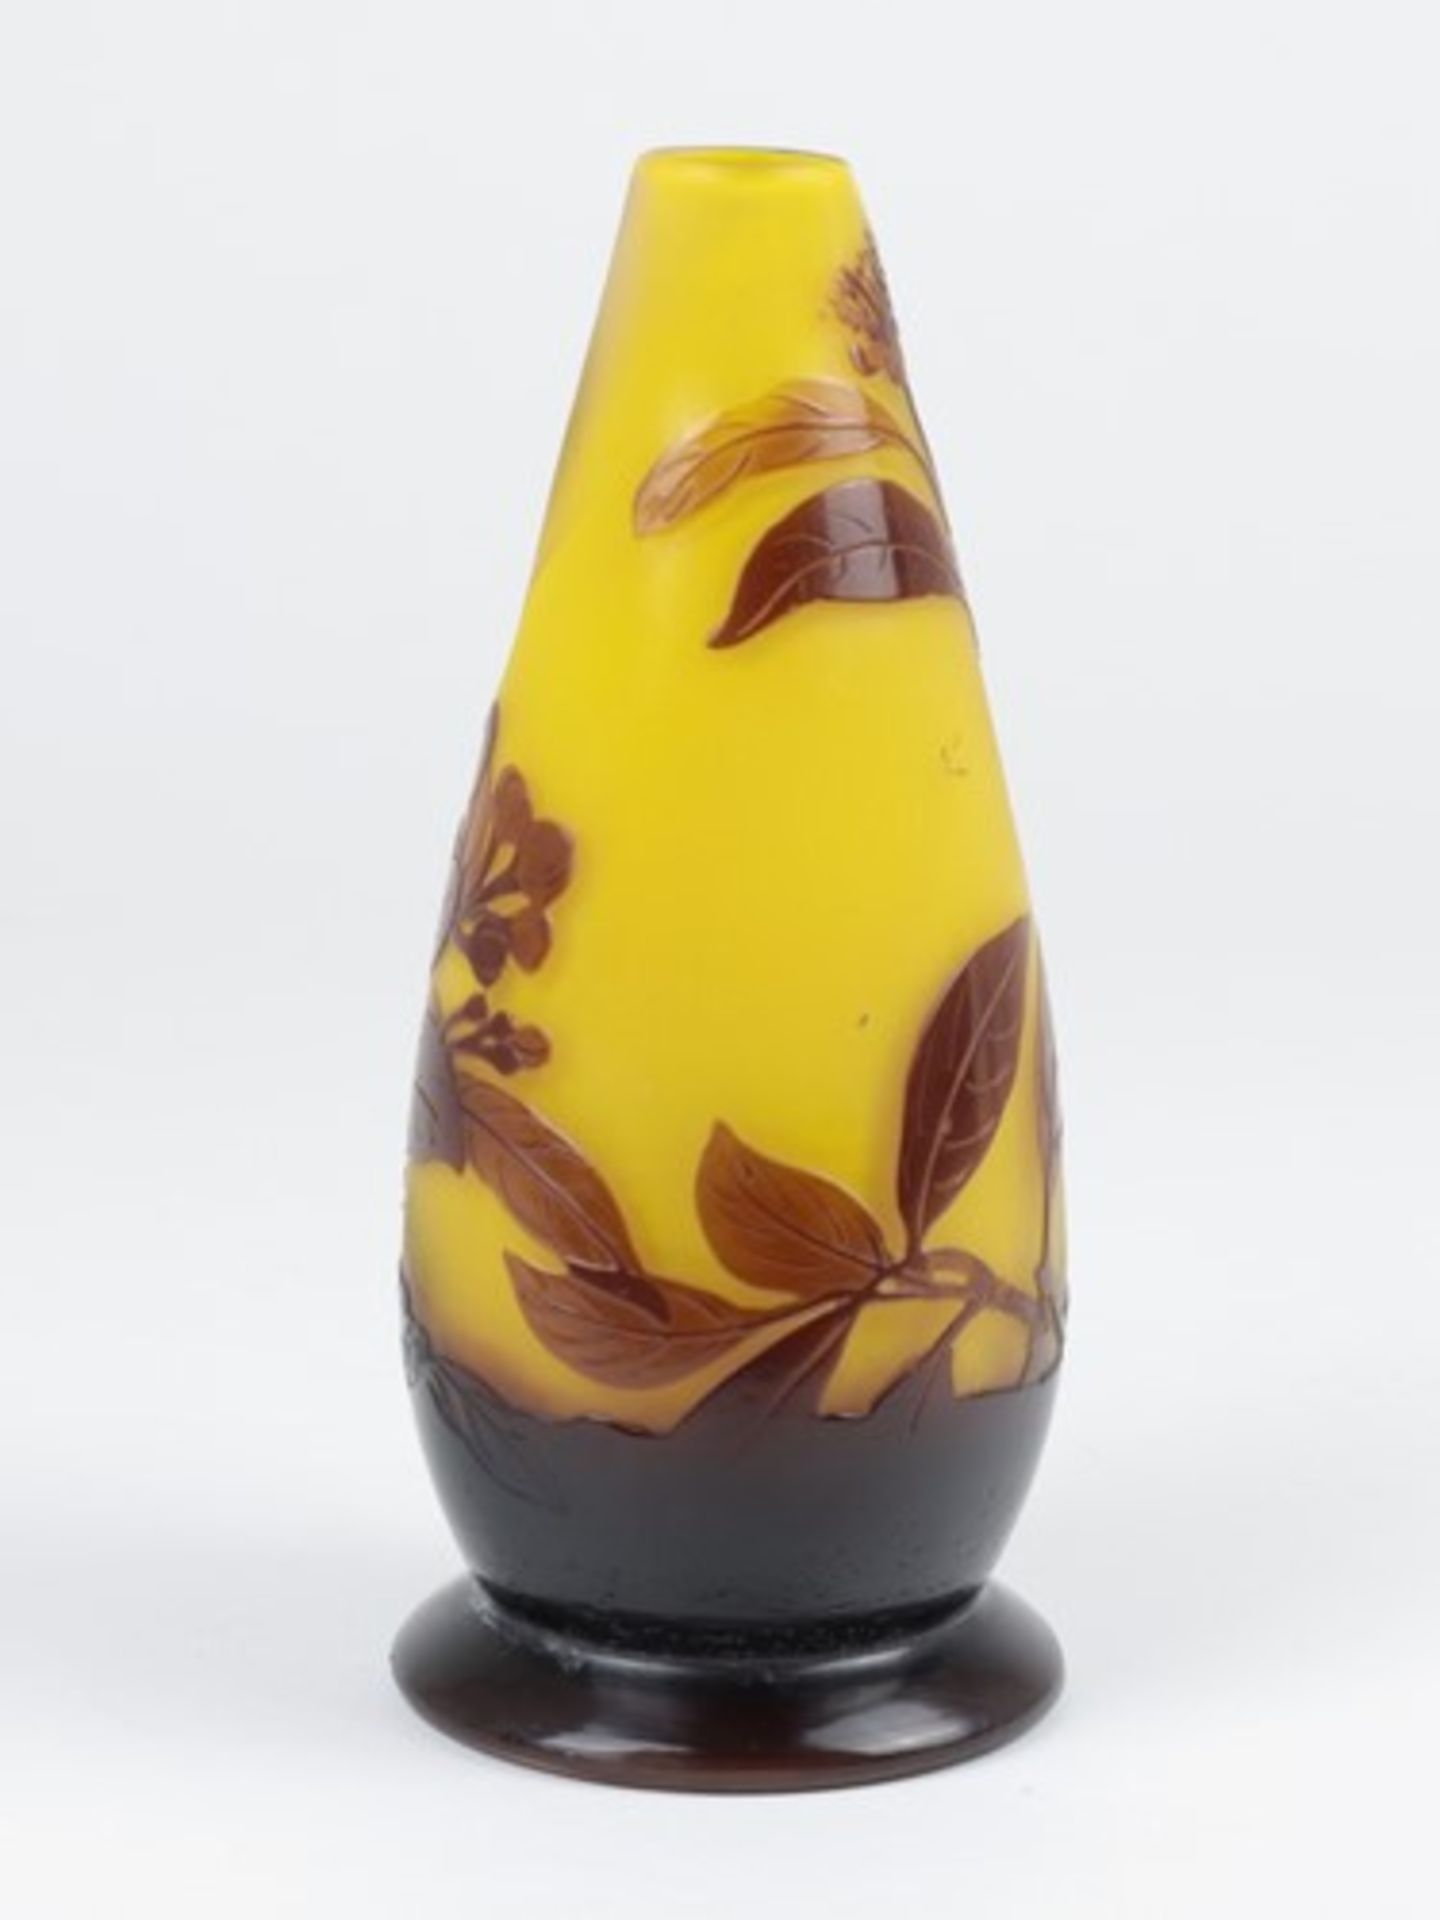 Gallé - Vase um 1900, Jugendstil, Emile Gallé, Frankreich, farbloses mattiertes Glas, runder Stand, - Bild 3 aus 5